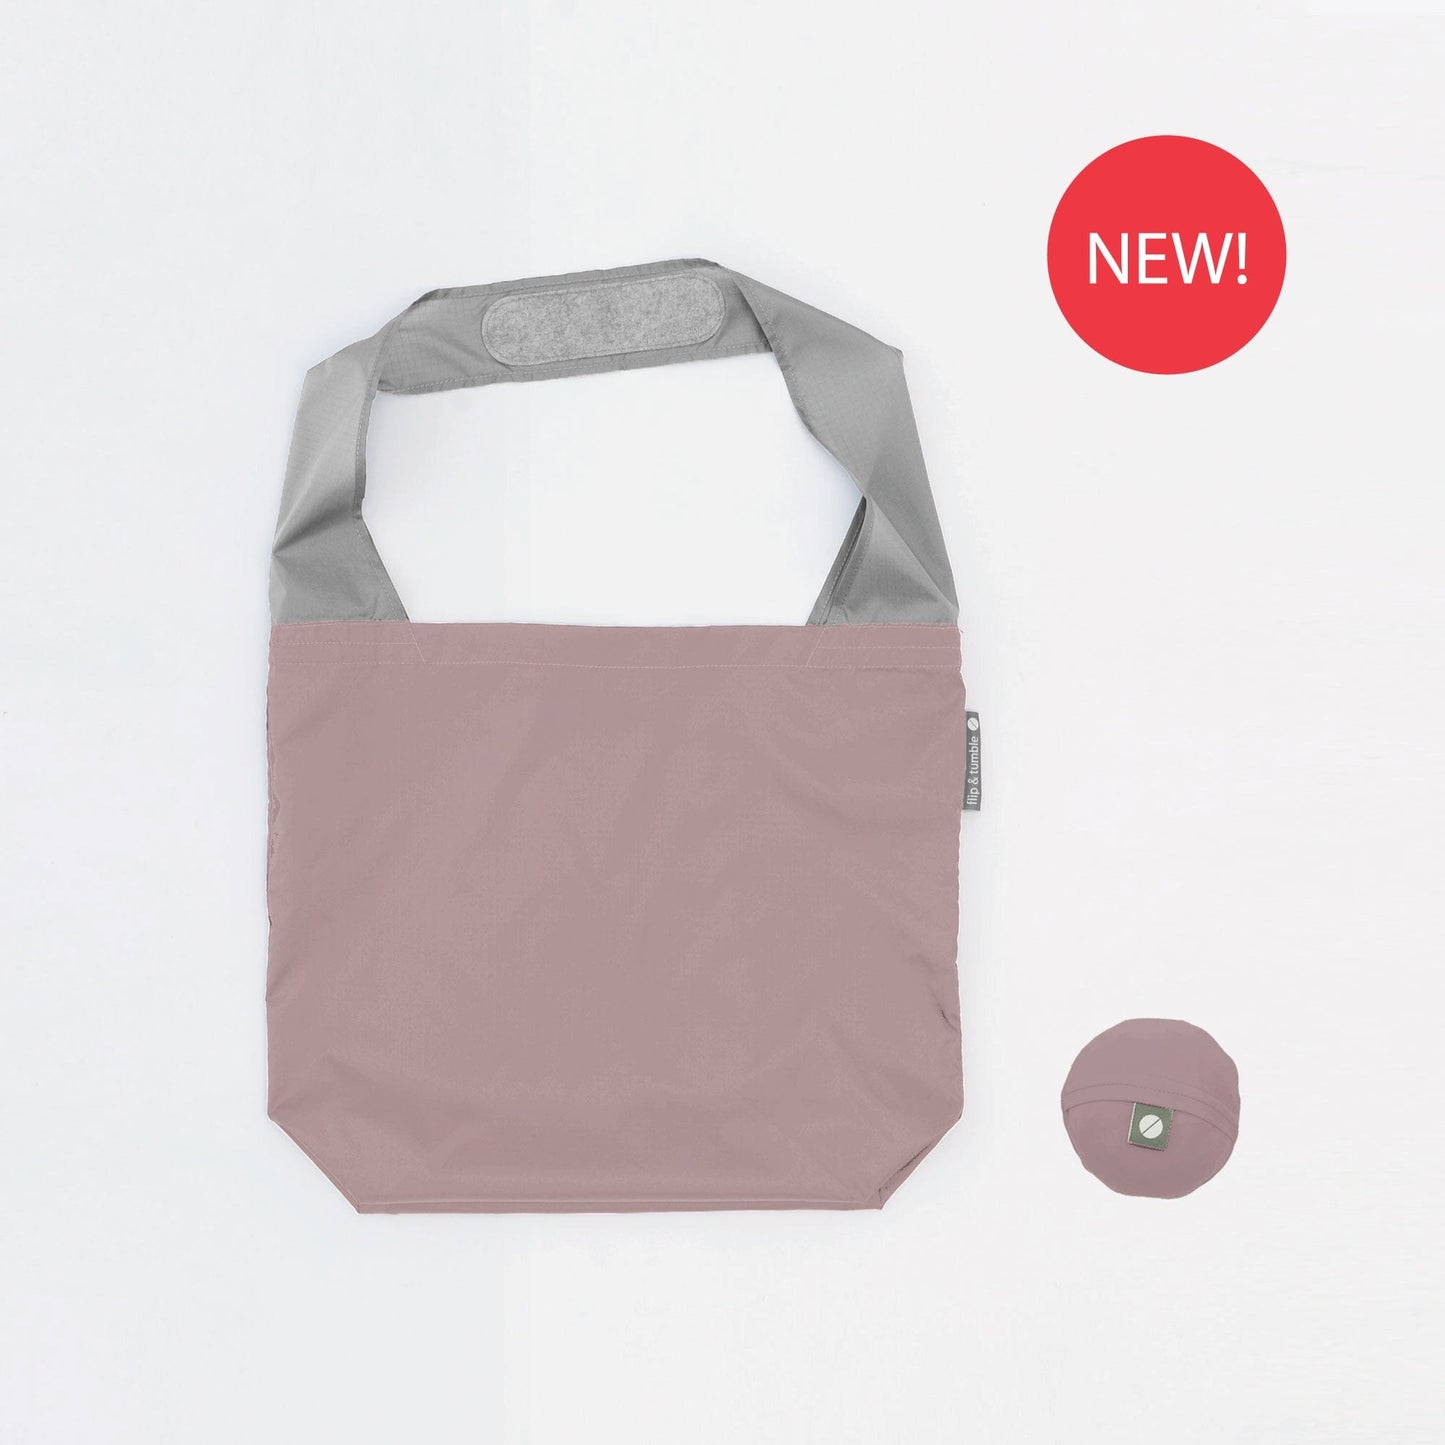 24-7 bag - flip & tumble - packable shopping bag, stylish reusable bag pink